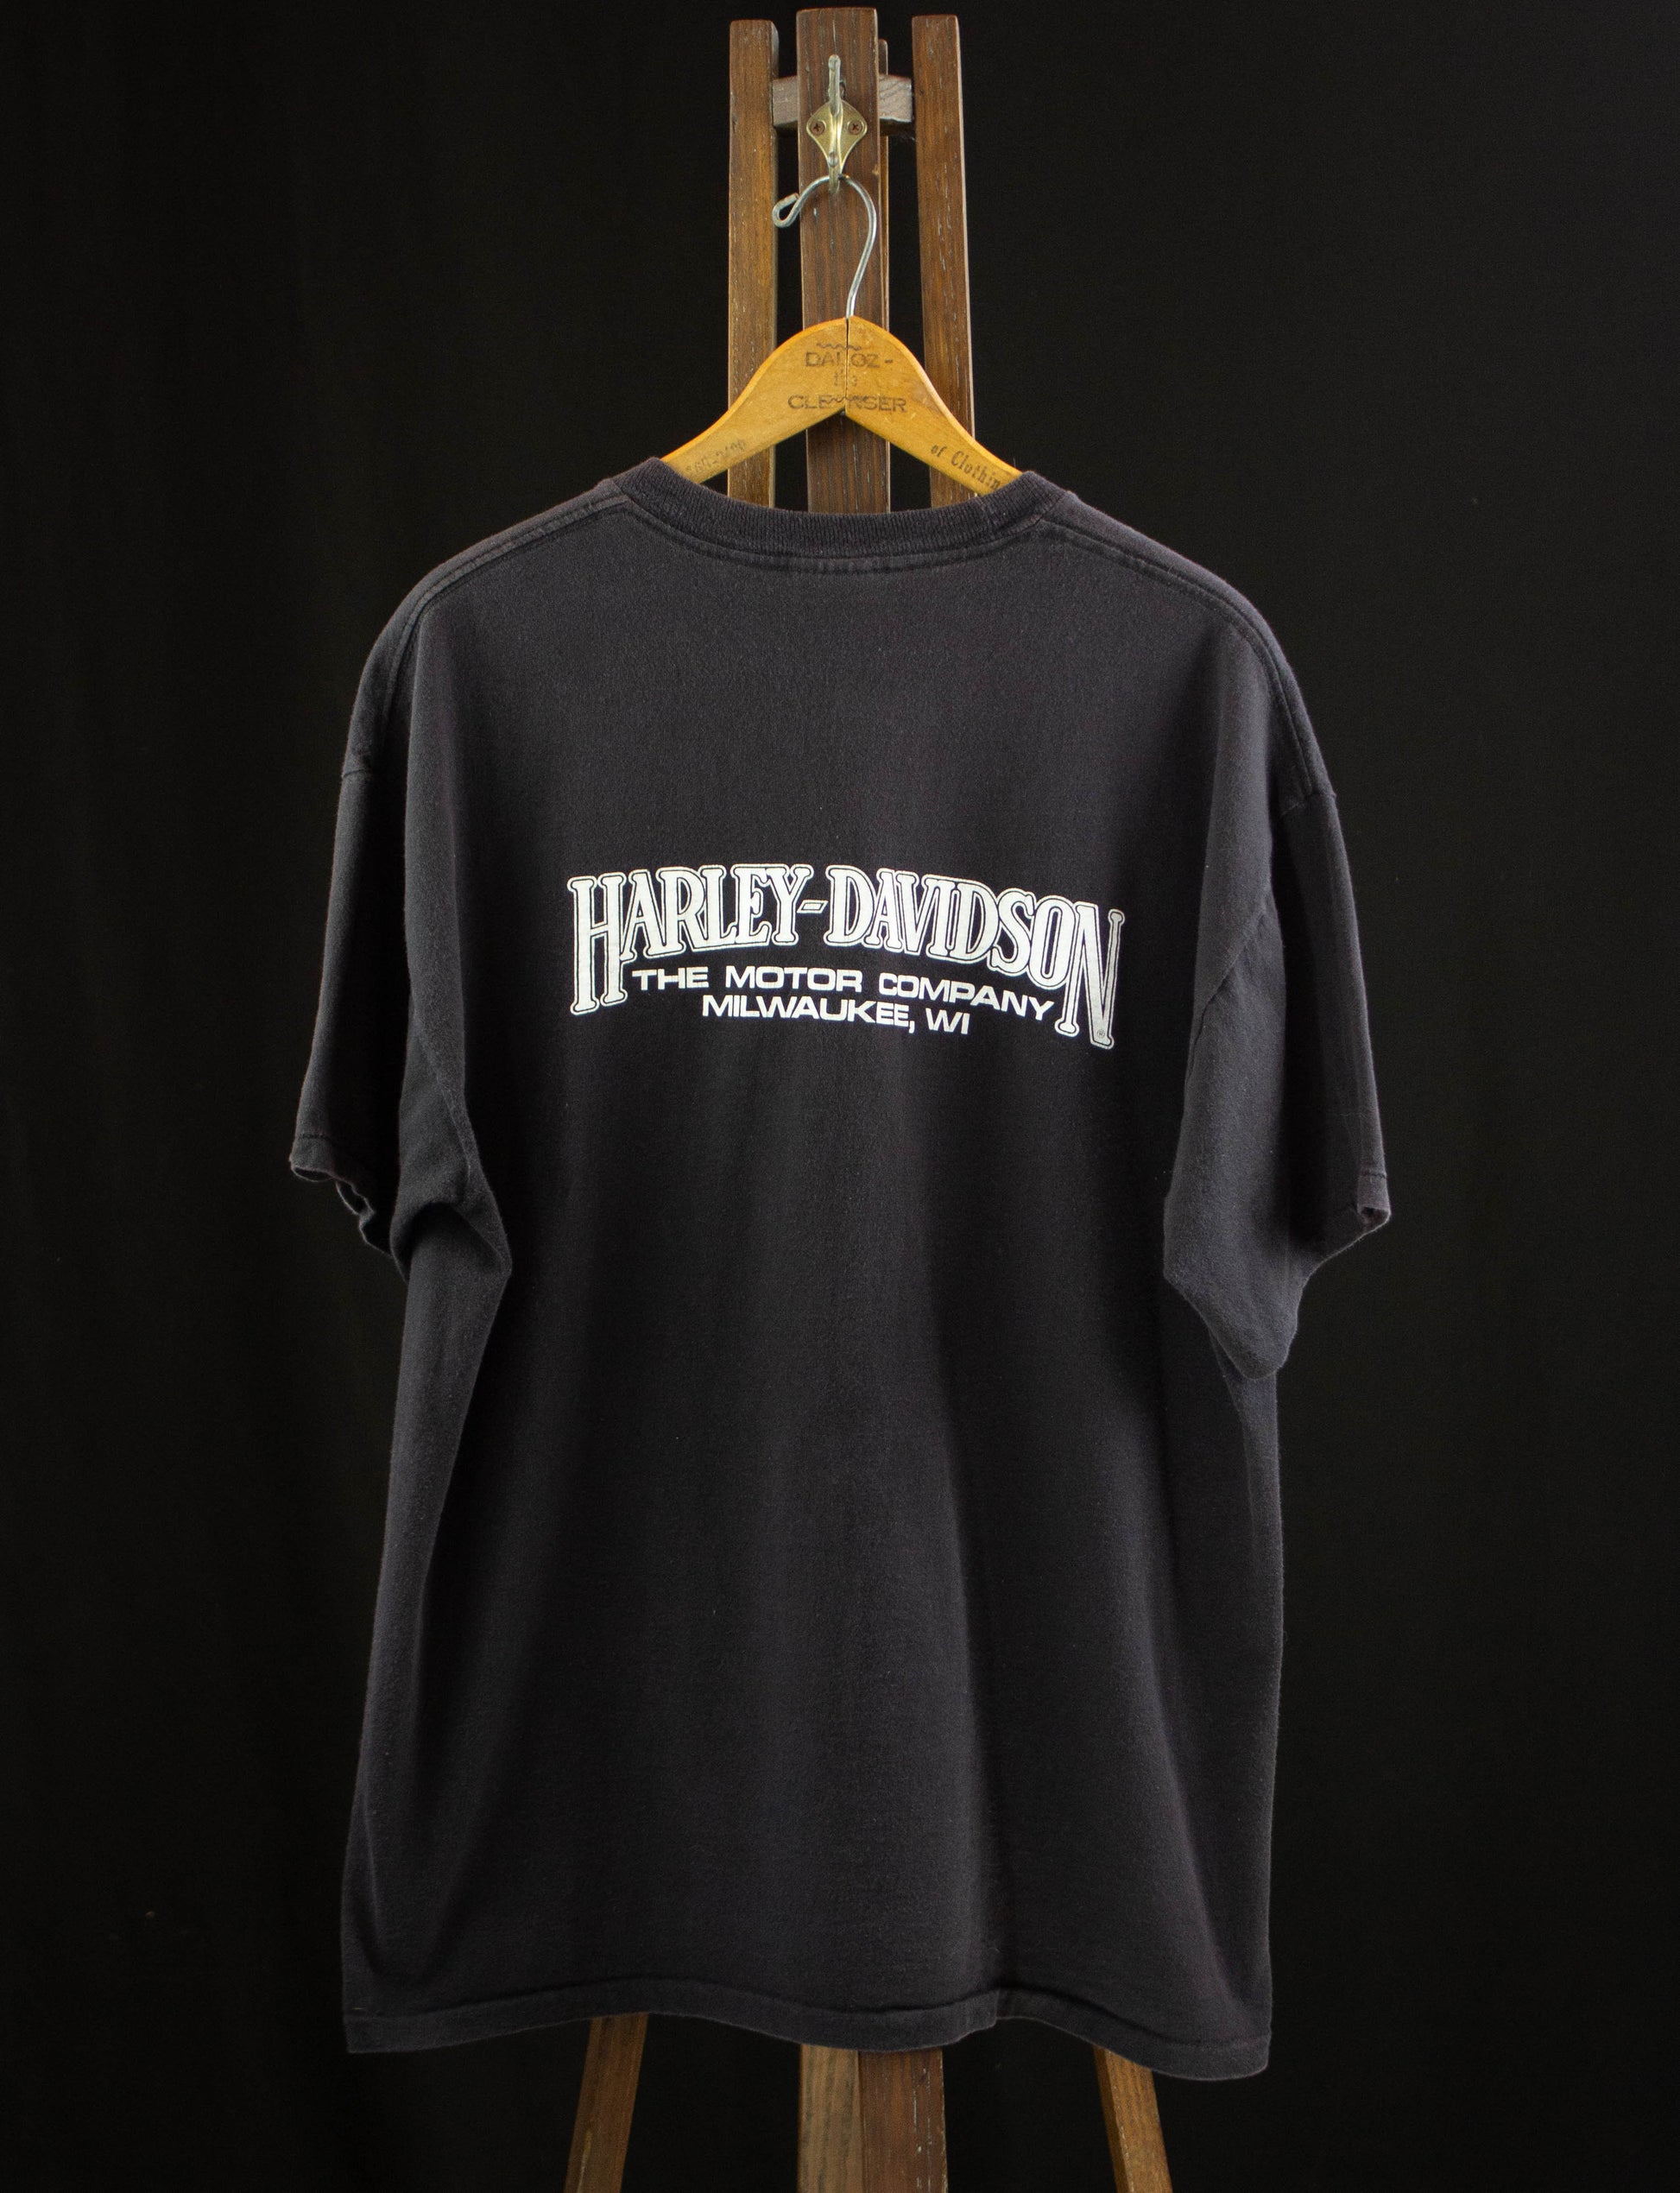 Vintage Harley Davidson Graphic T Shirt 1987 On The Eighth Day, God Created Harley Davidson Black Large-XL